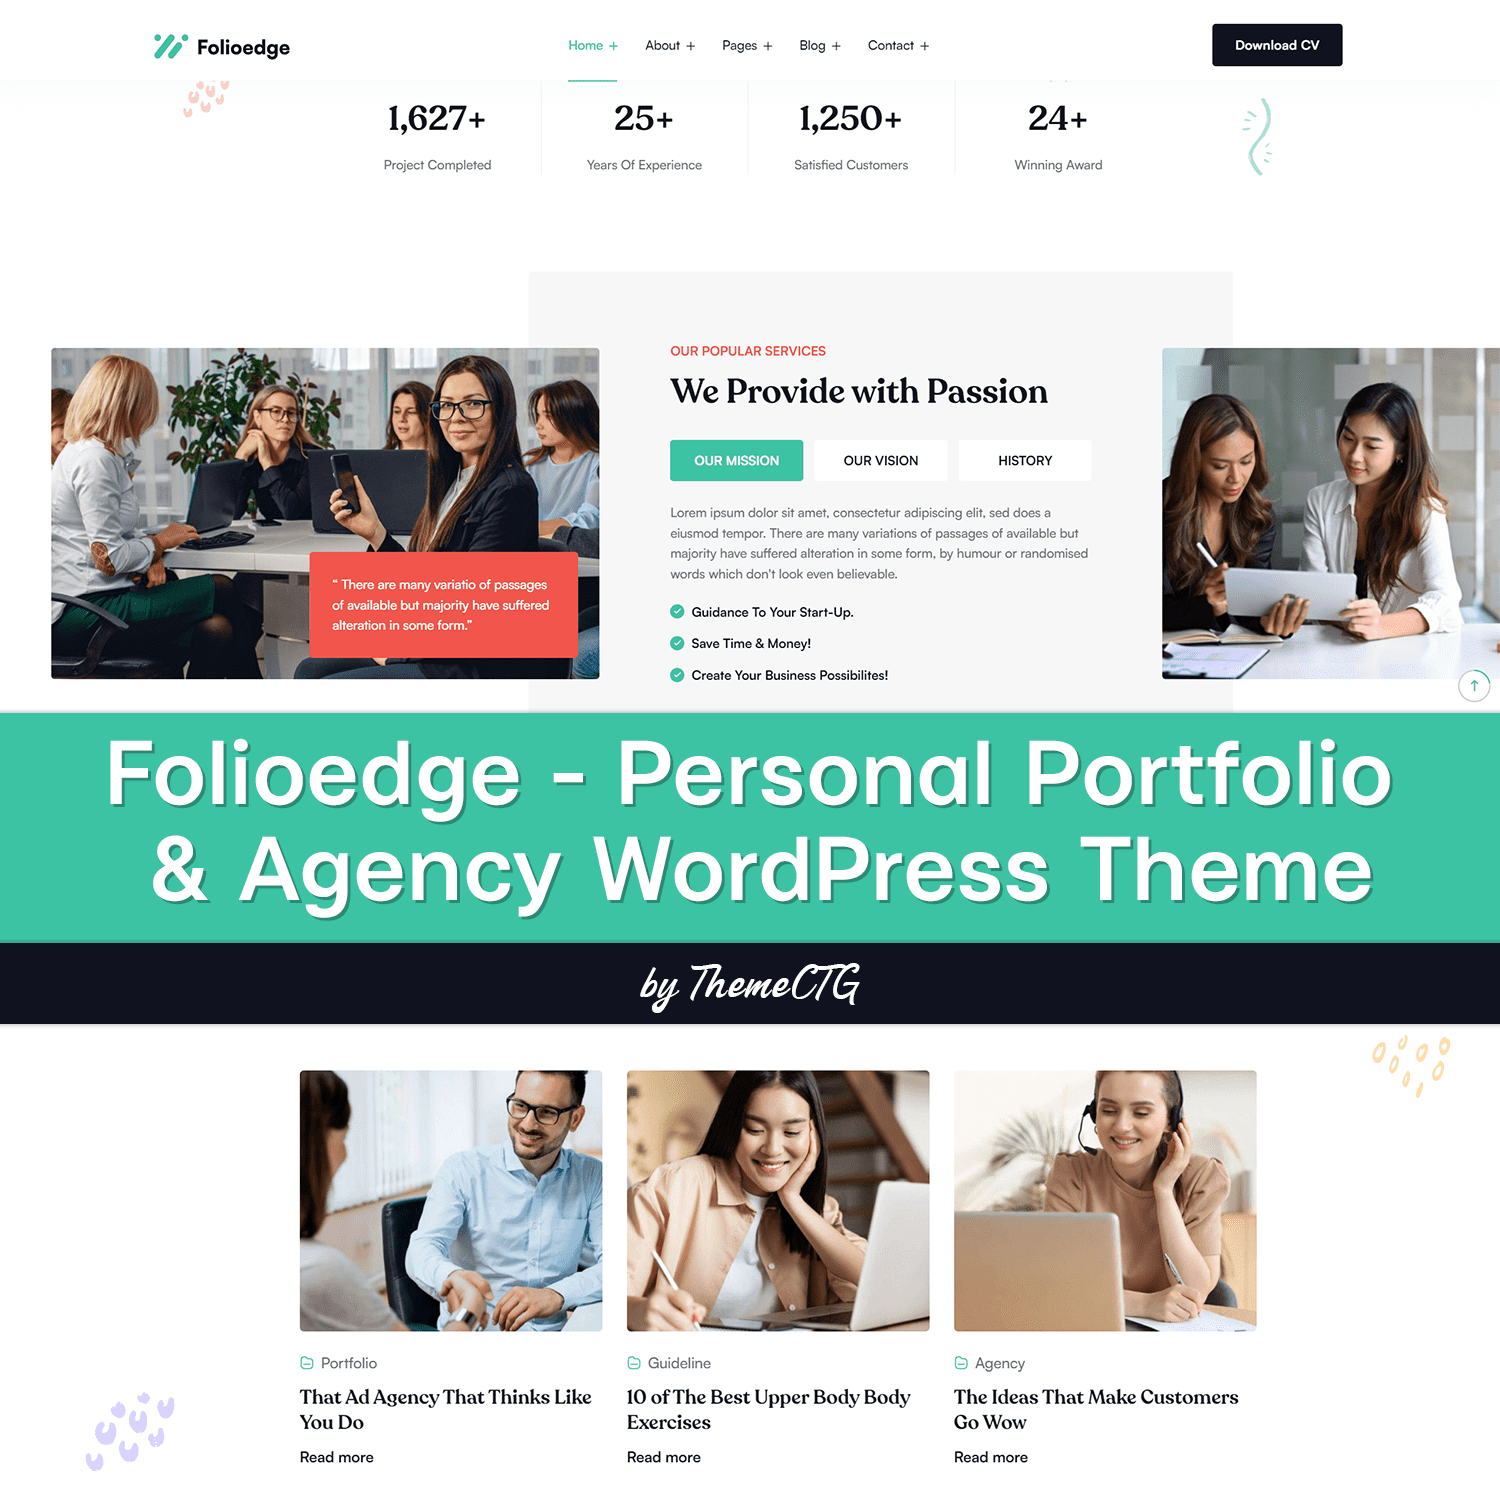 Folioedge - Personal Portfolio & Agency WordPress Theme cover.